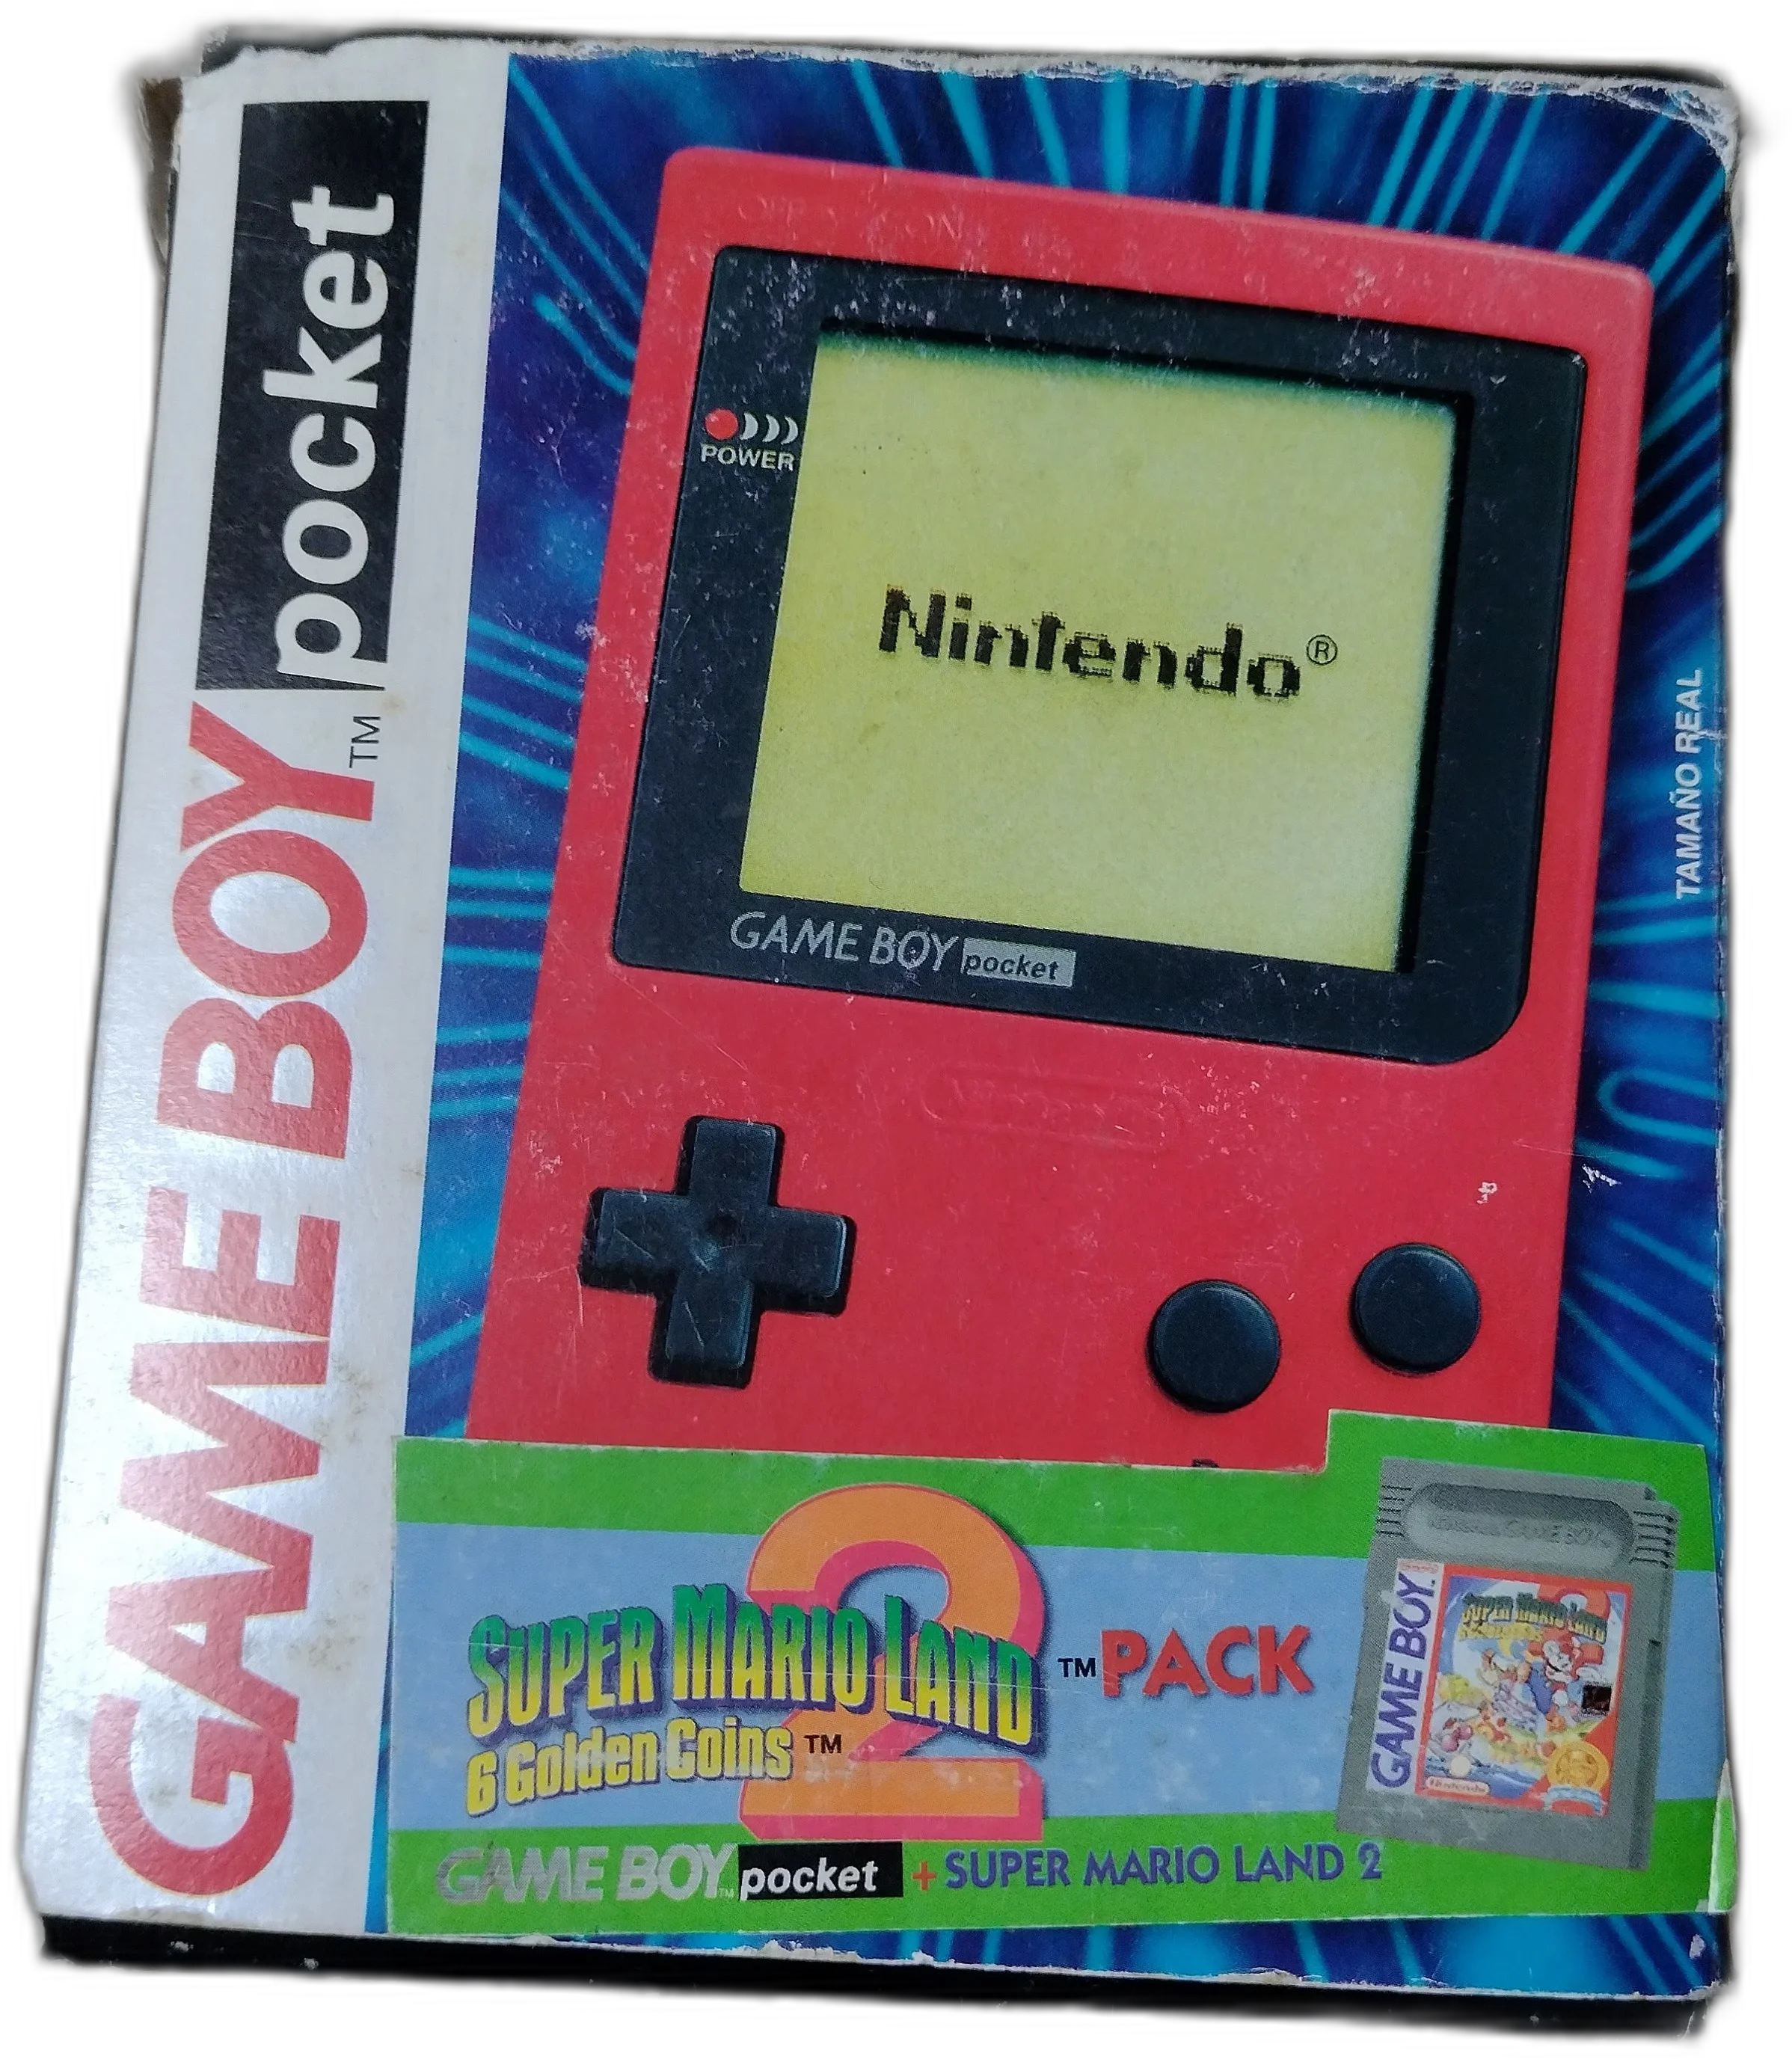  Nintendo Game Boy Pocket Super Mario Land 2 Pack